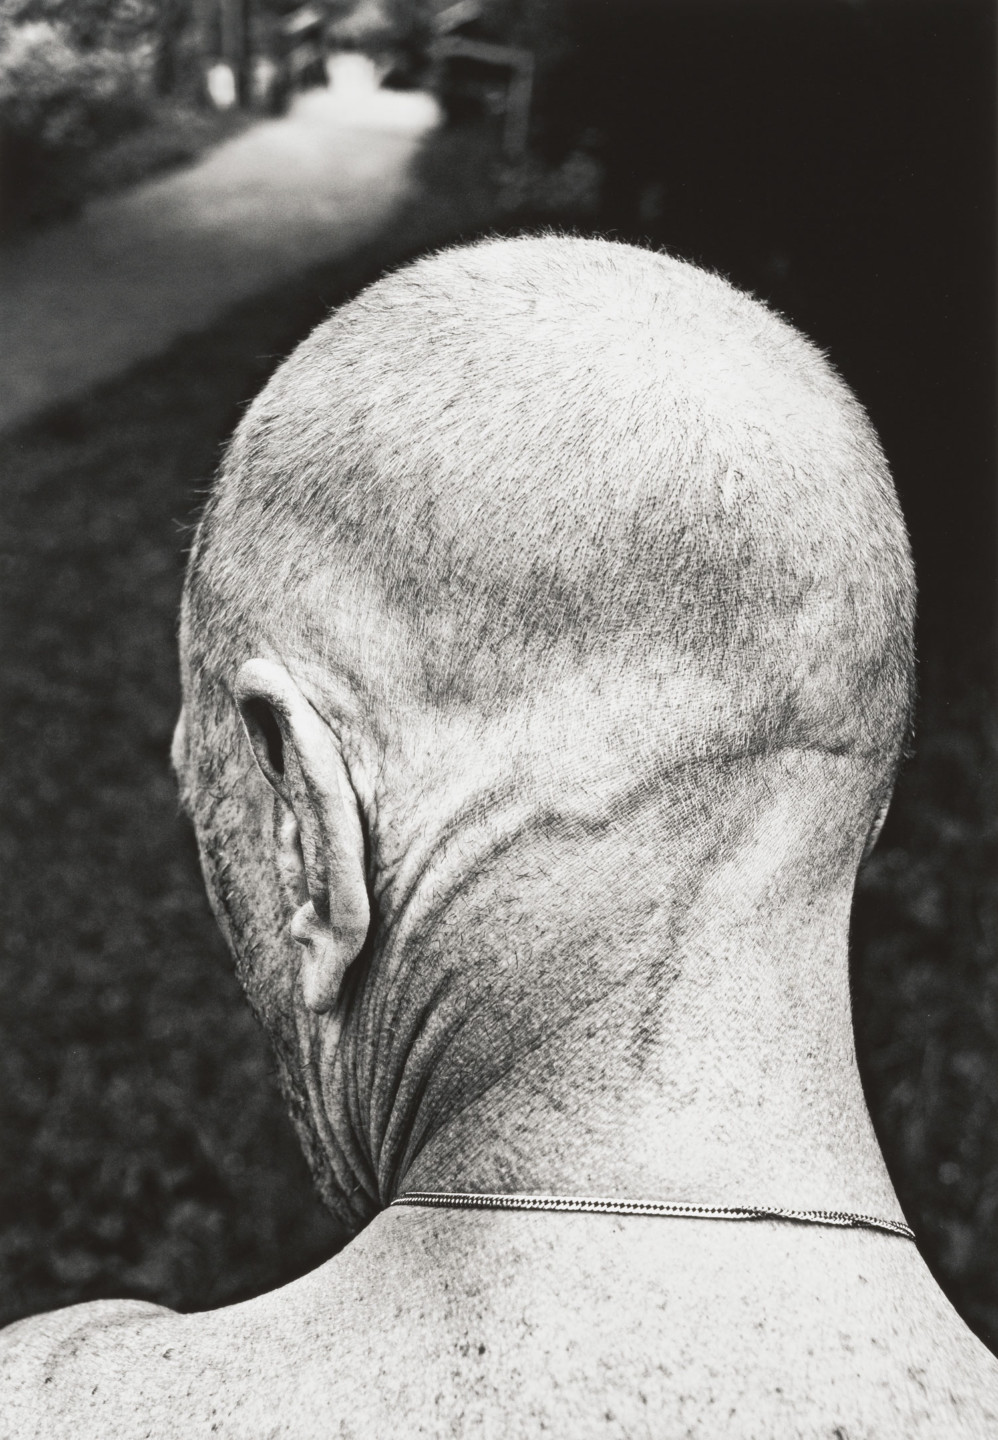 Photograph depicting a man's neck